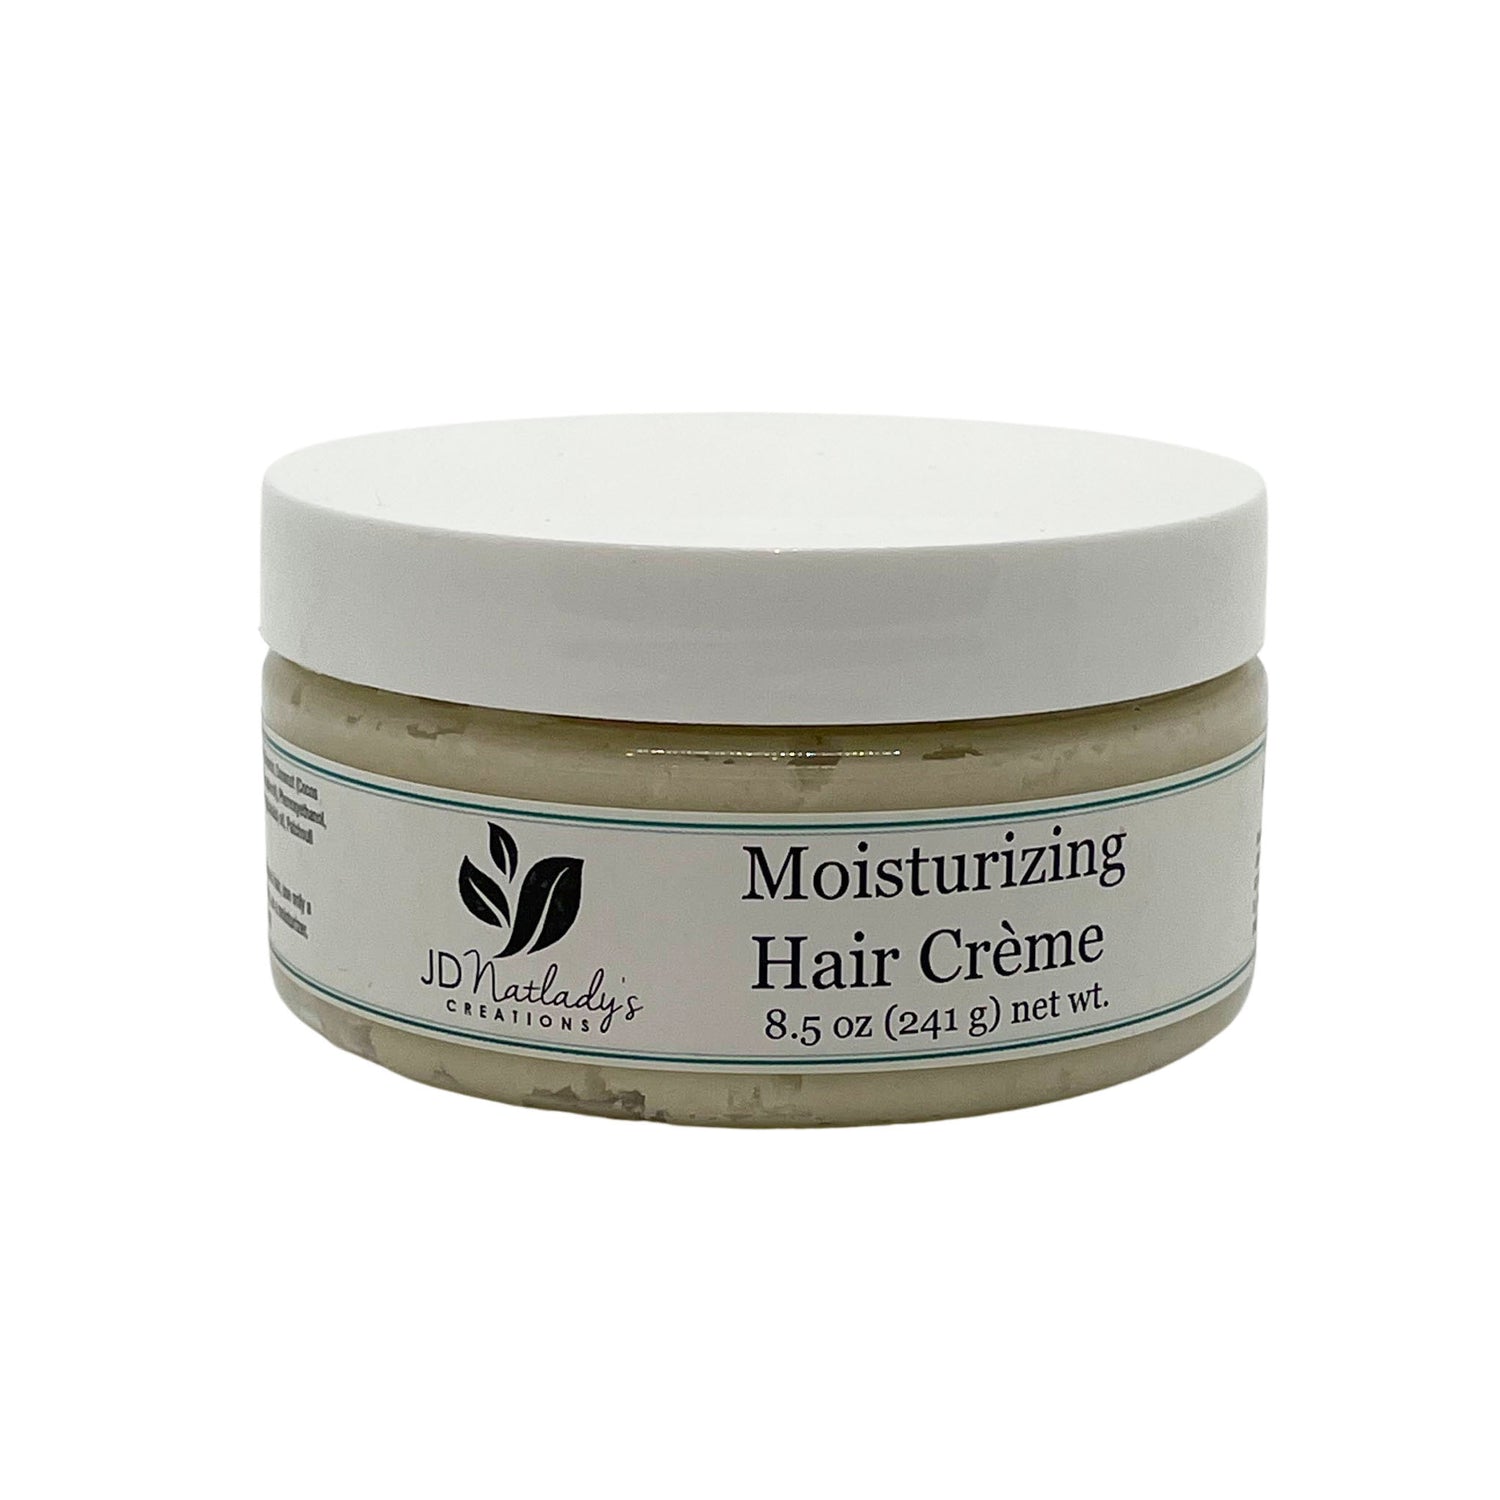 moisturizing hair cream by JDNatlady's Creations